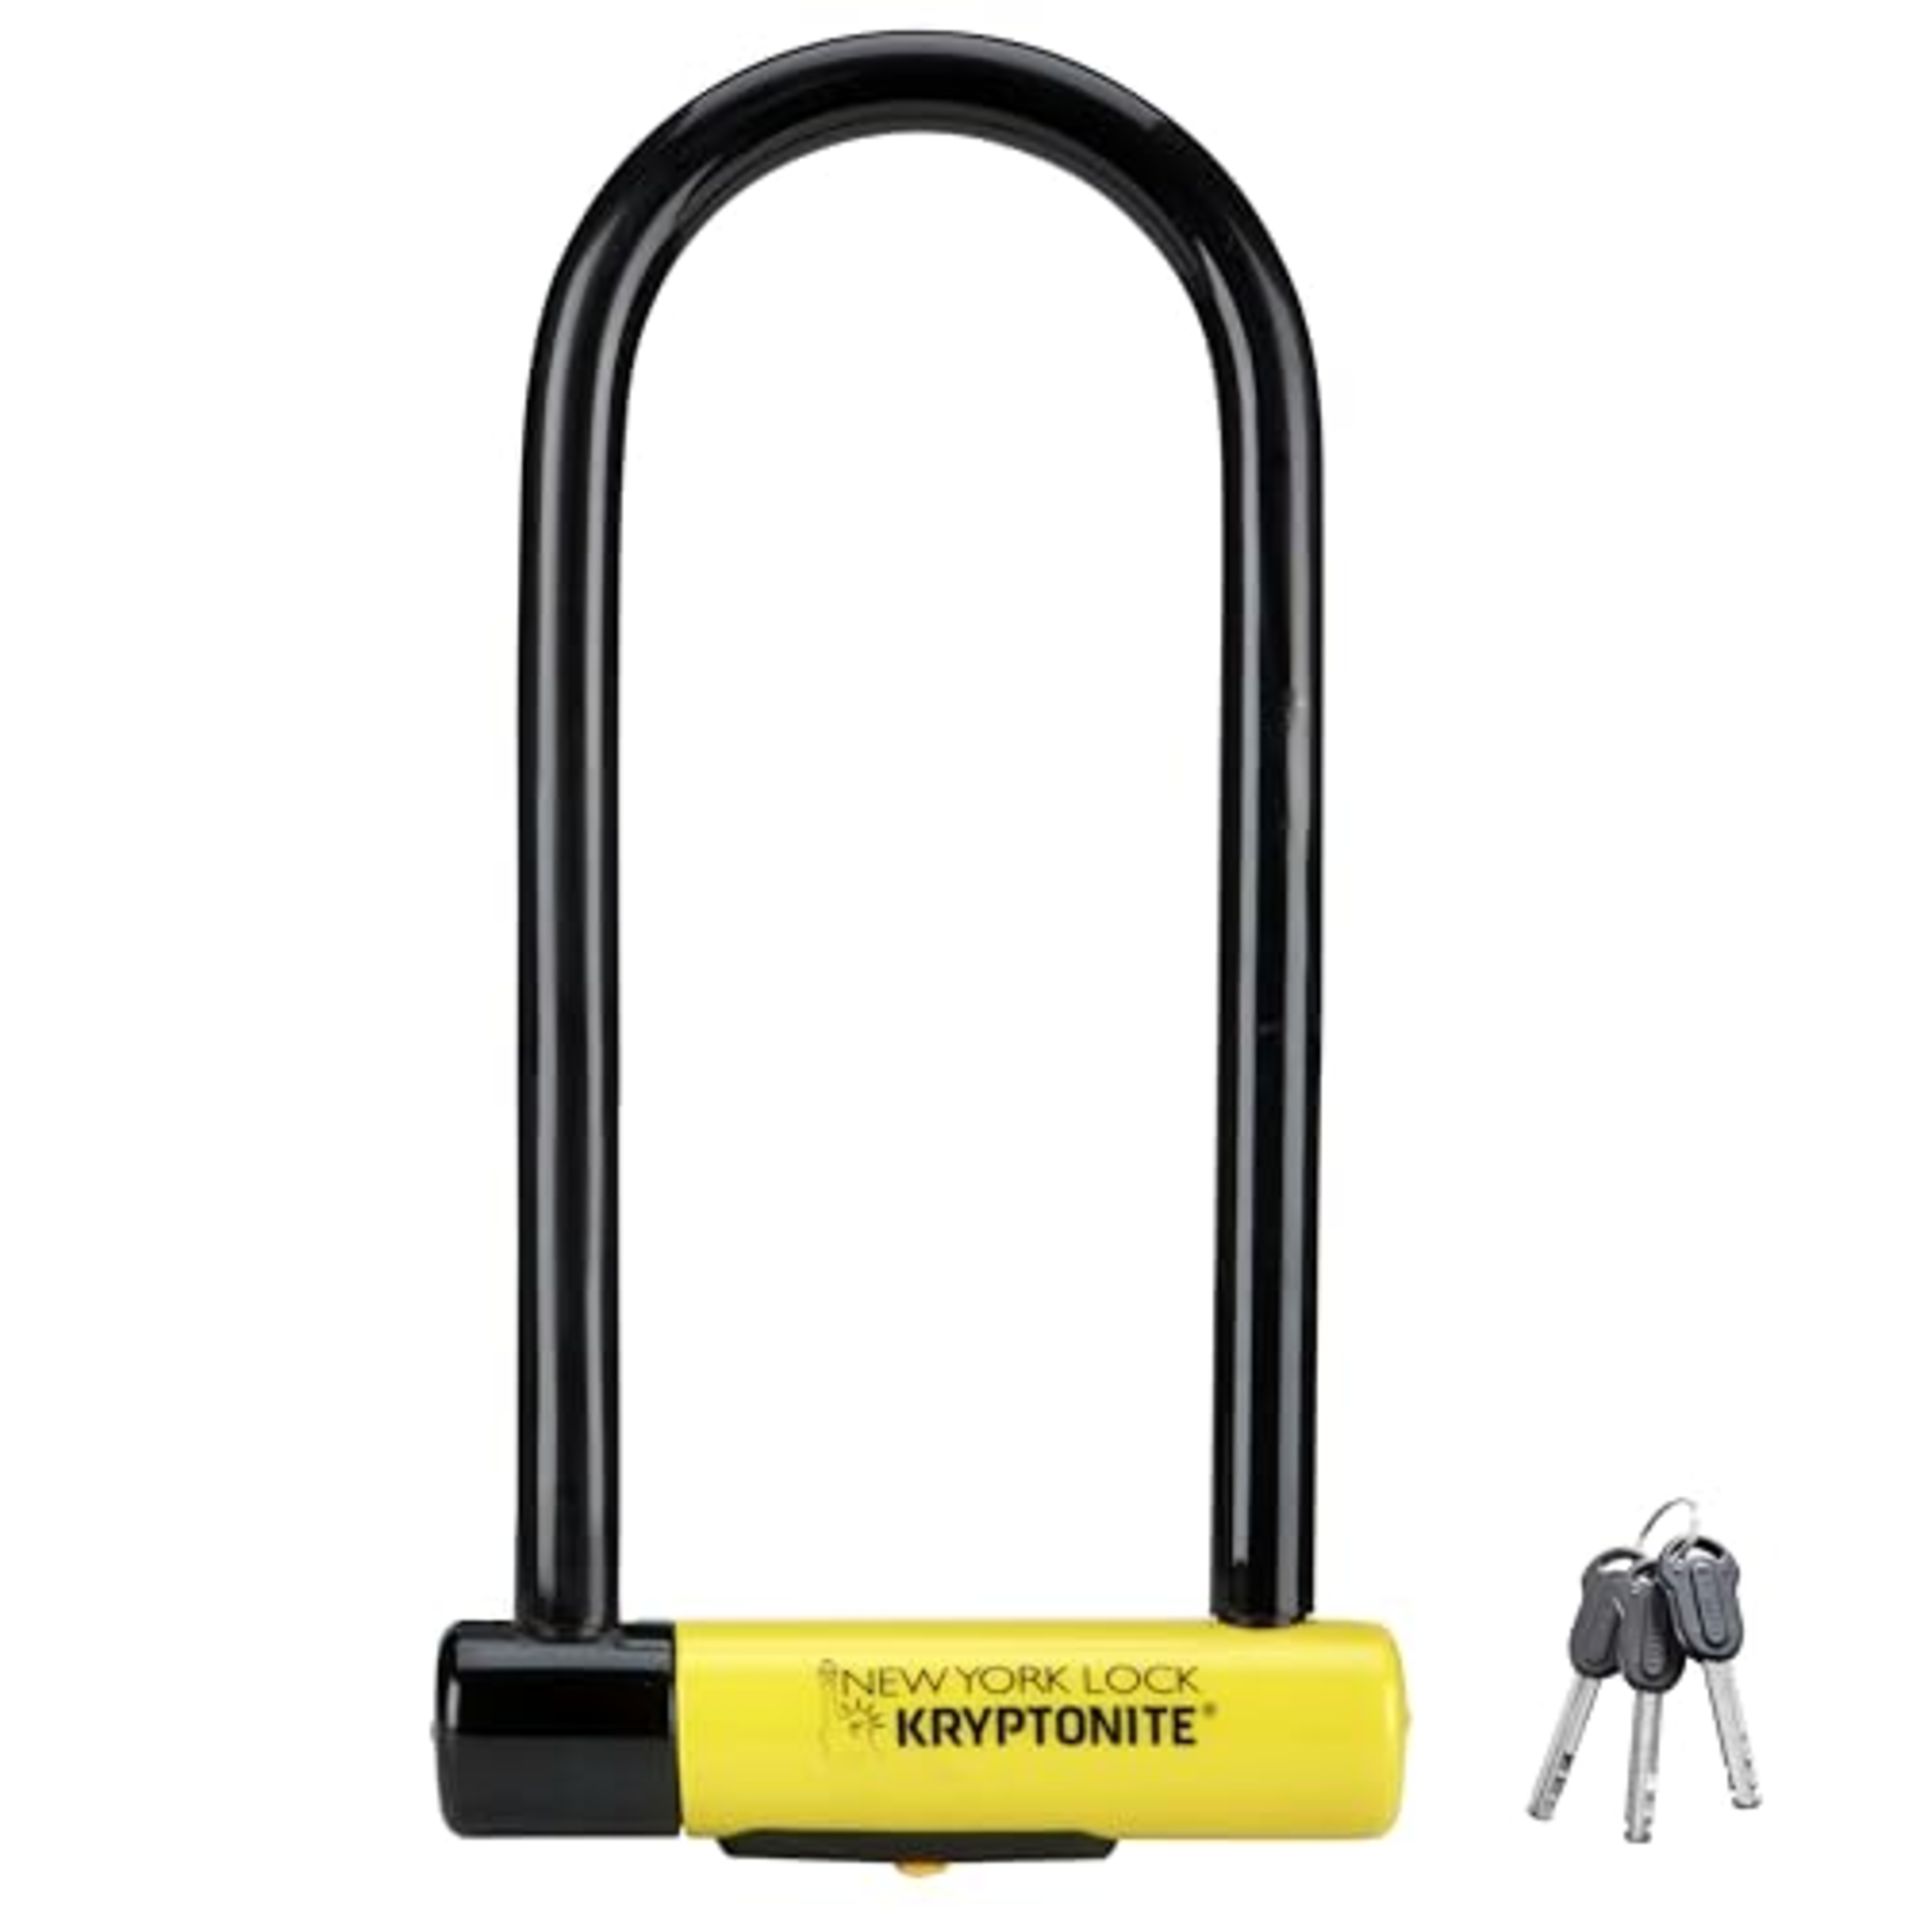 RRP £114.00 Kryptonite key lock U-lock New York LS - Bike Lock, Security Level 9/10, Offers a High